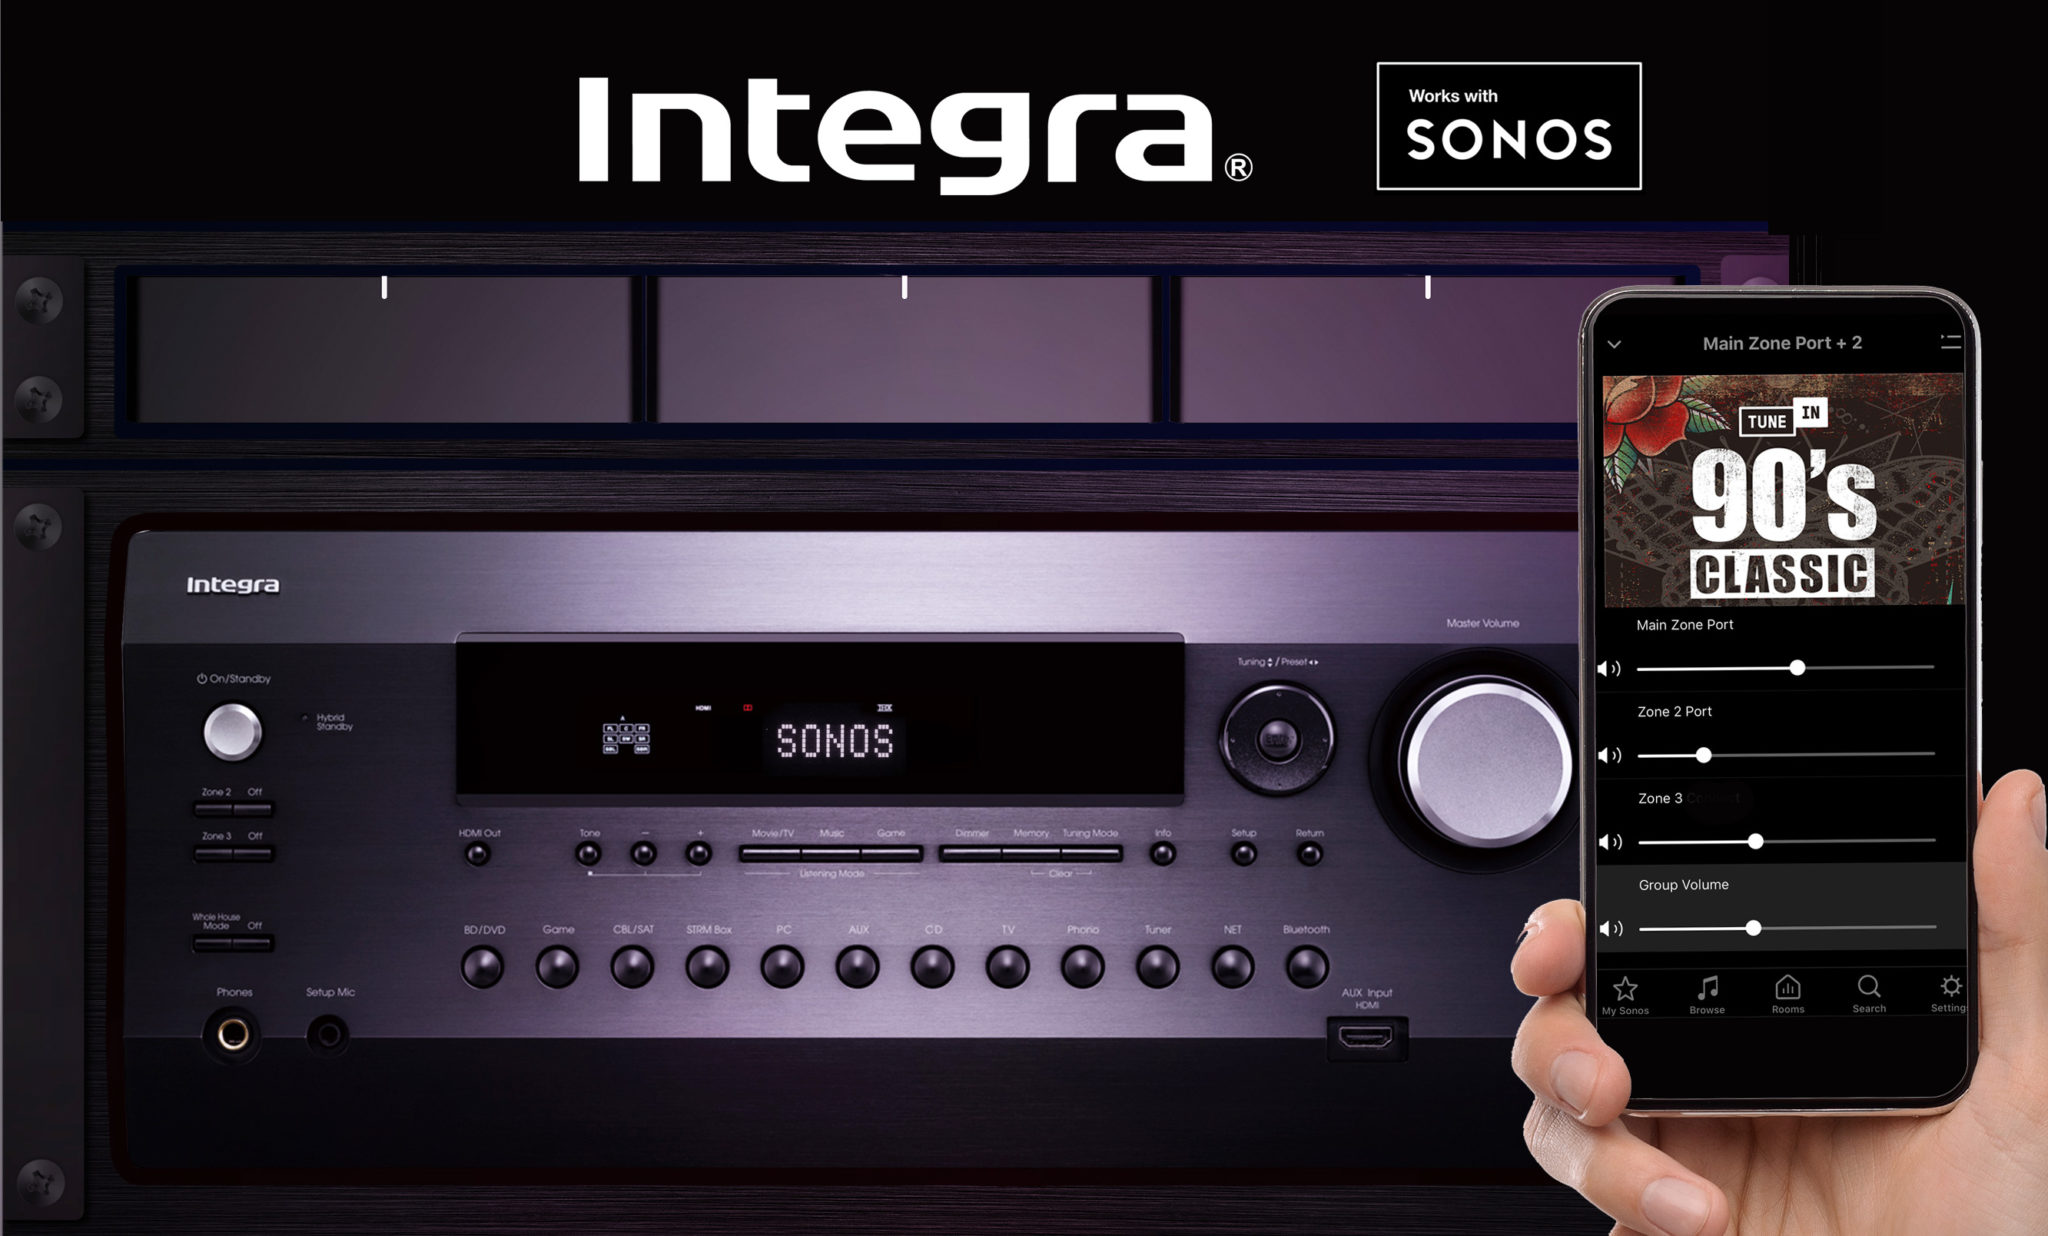 Integra and Onkyo Announce Sonos Compatibility